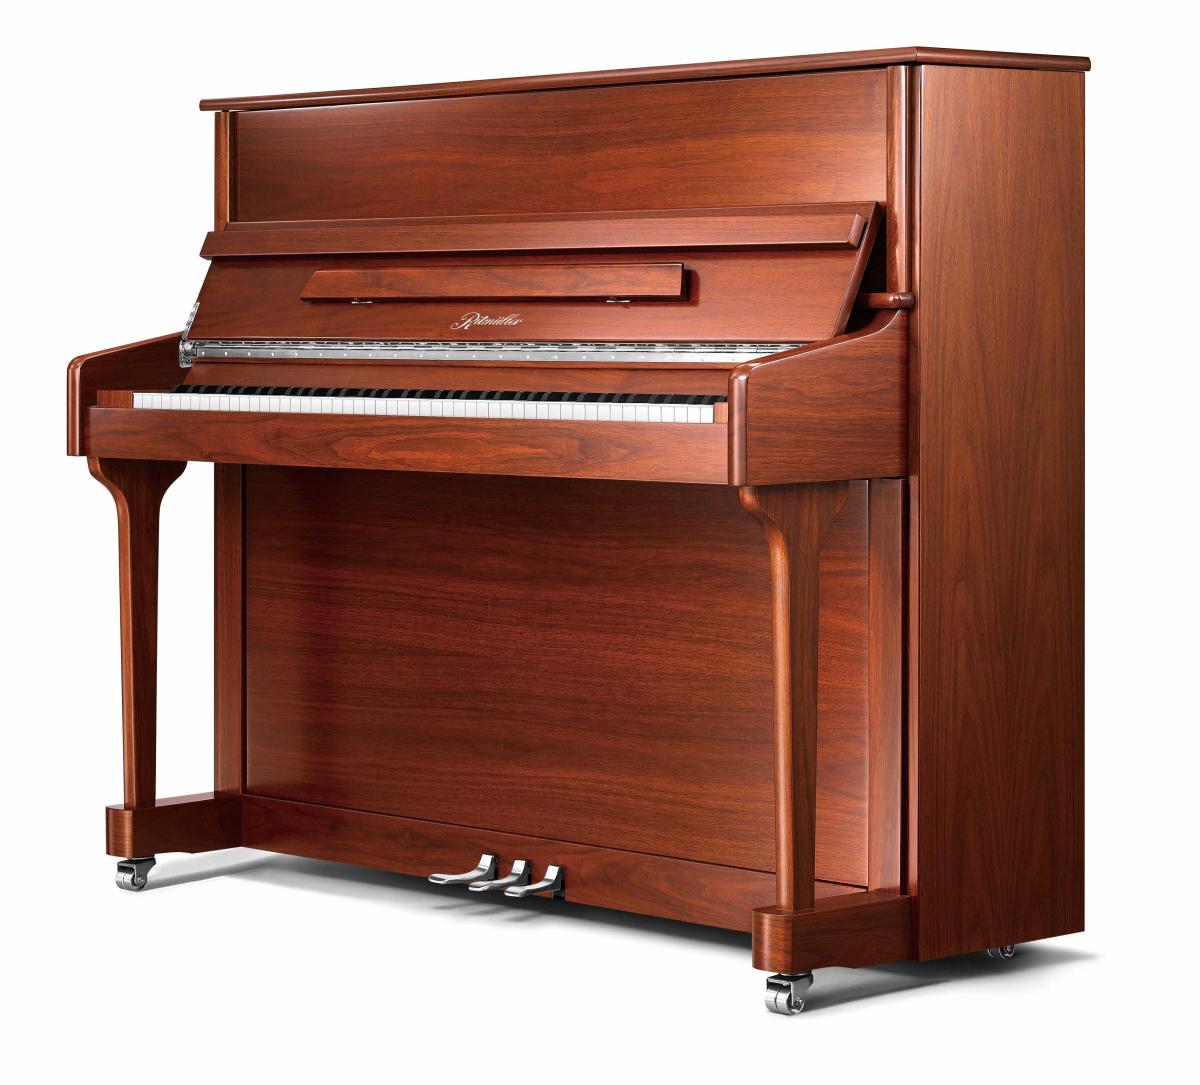 Ritmuller 118 Classic upright piano